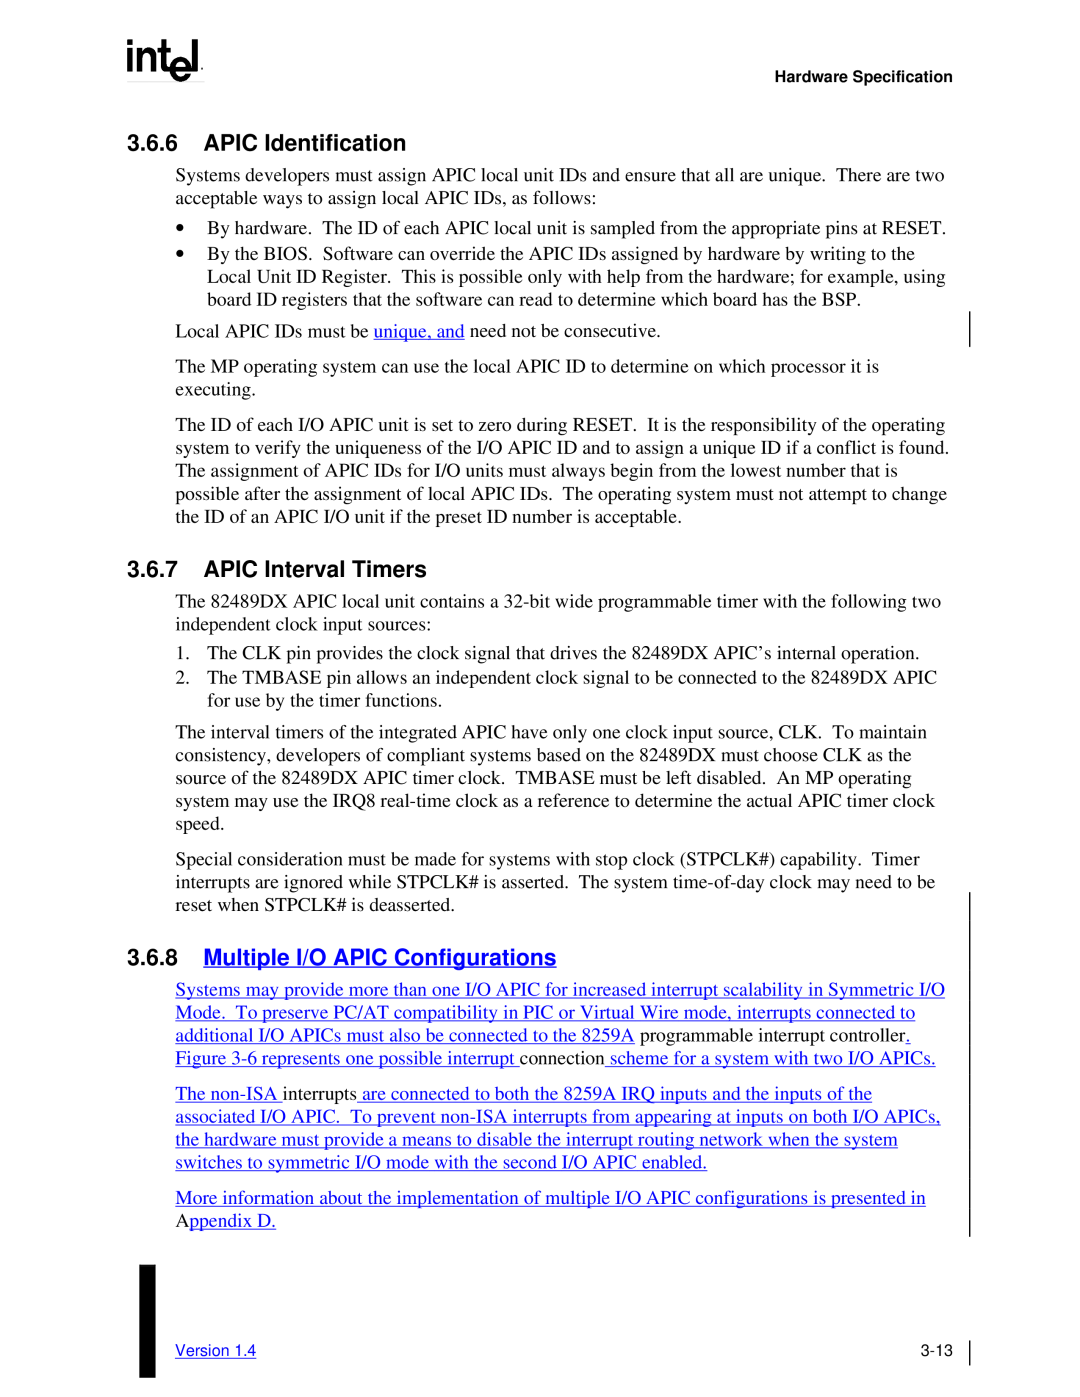 Intel MultiProcessor manual 3.6.6APIC Identification, 3.6.7APIC Interval Timers, 3.6.8Multiple I/O APIC Configurations 